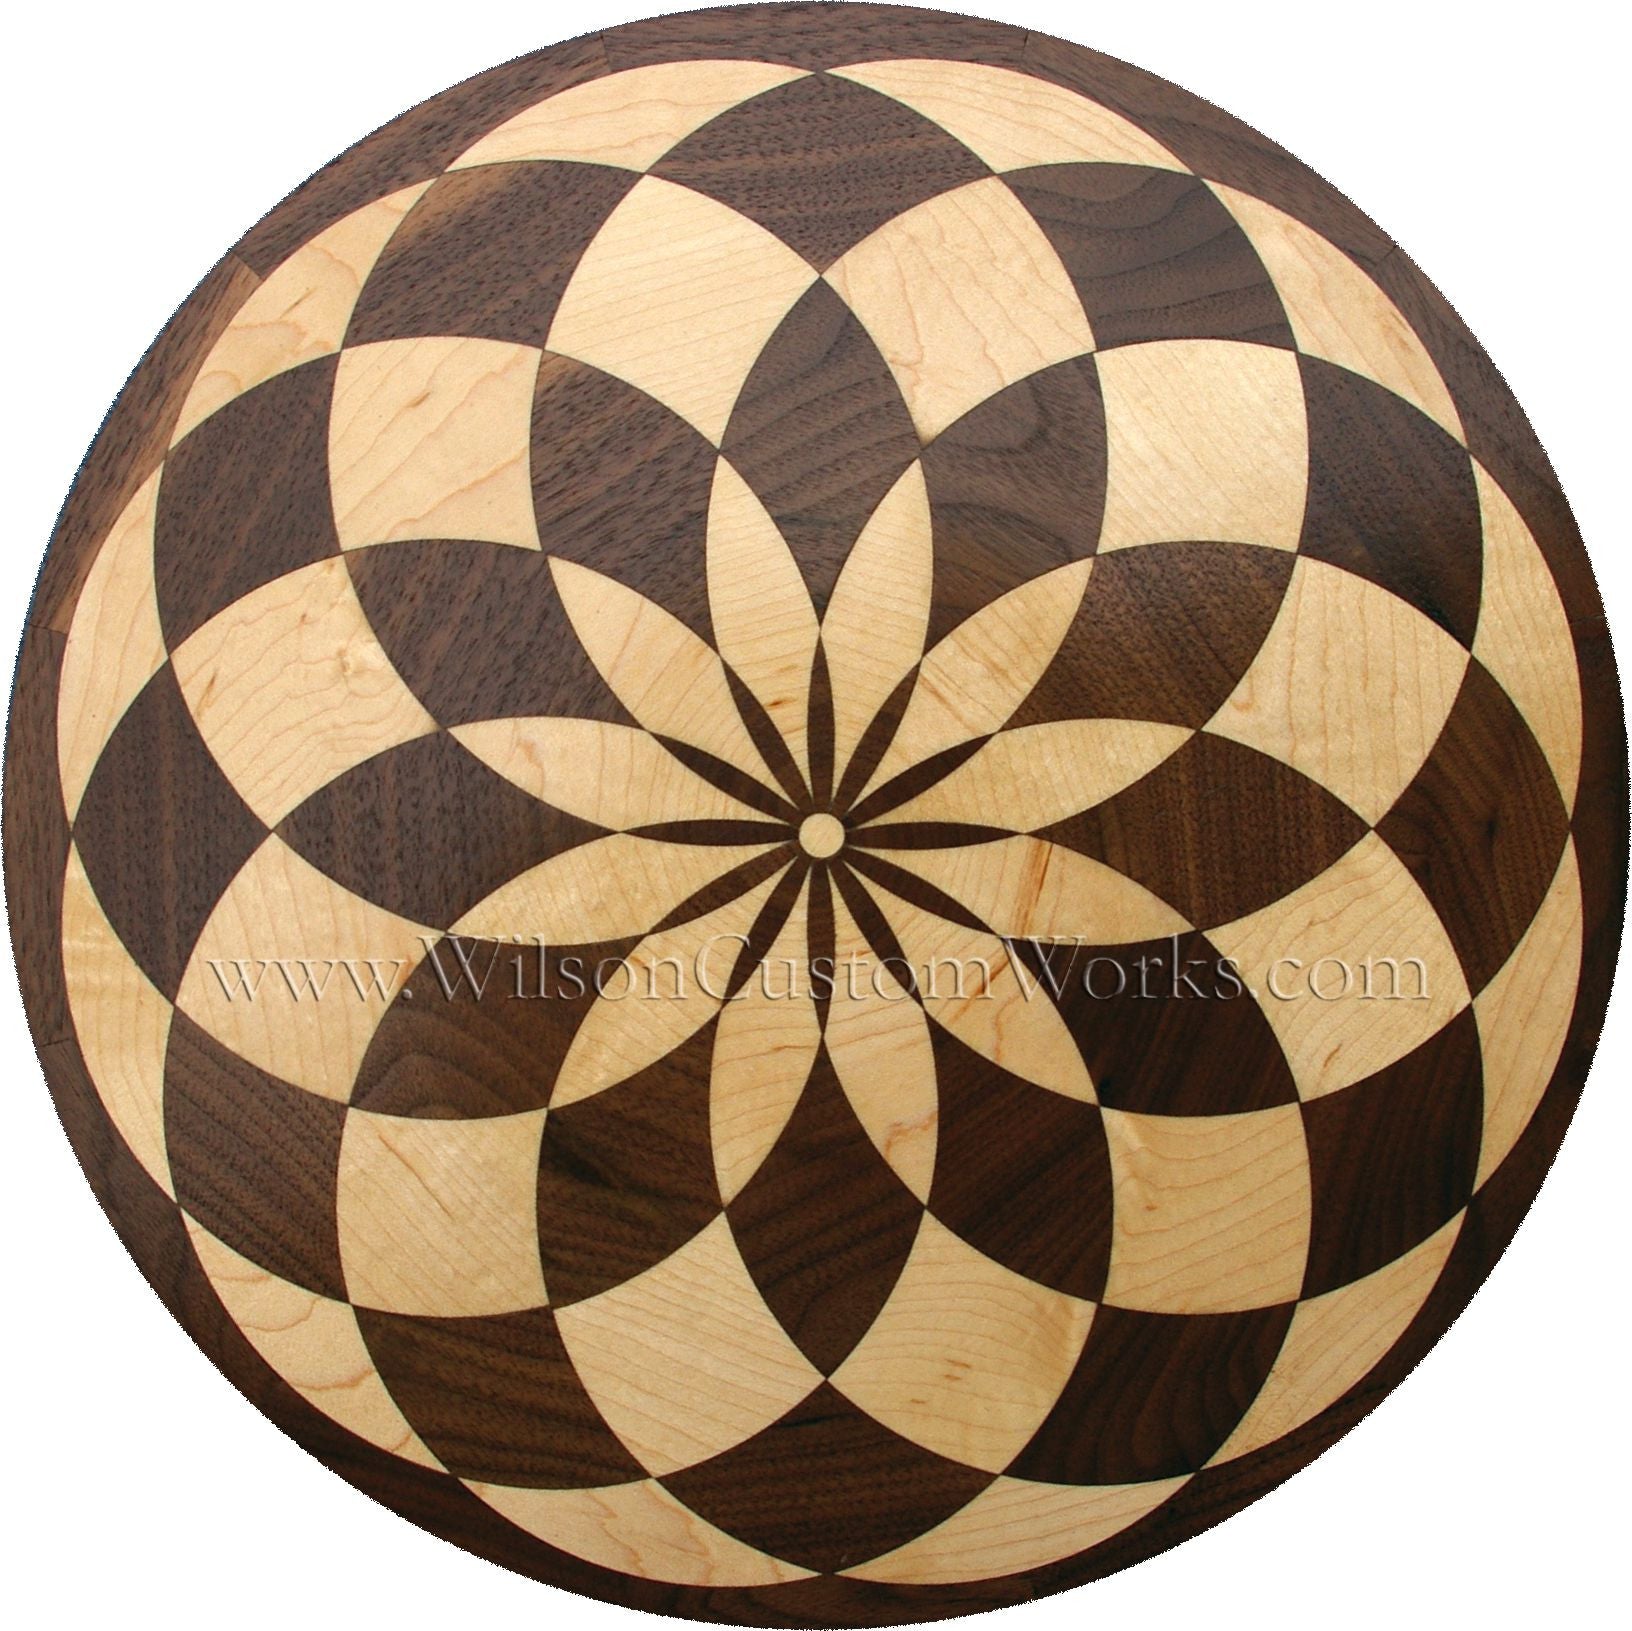 Wilson Custom Works hardwood wood floor inlay medallion baltic modern design